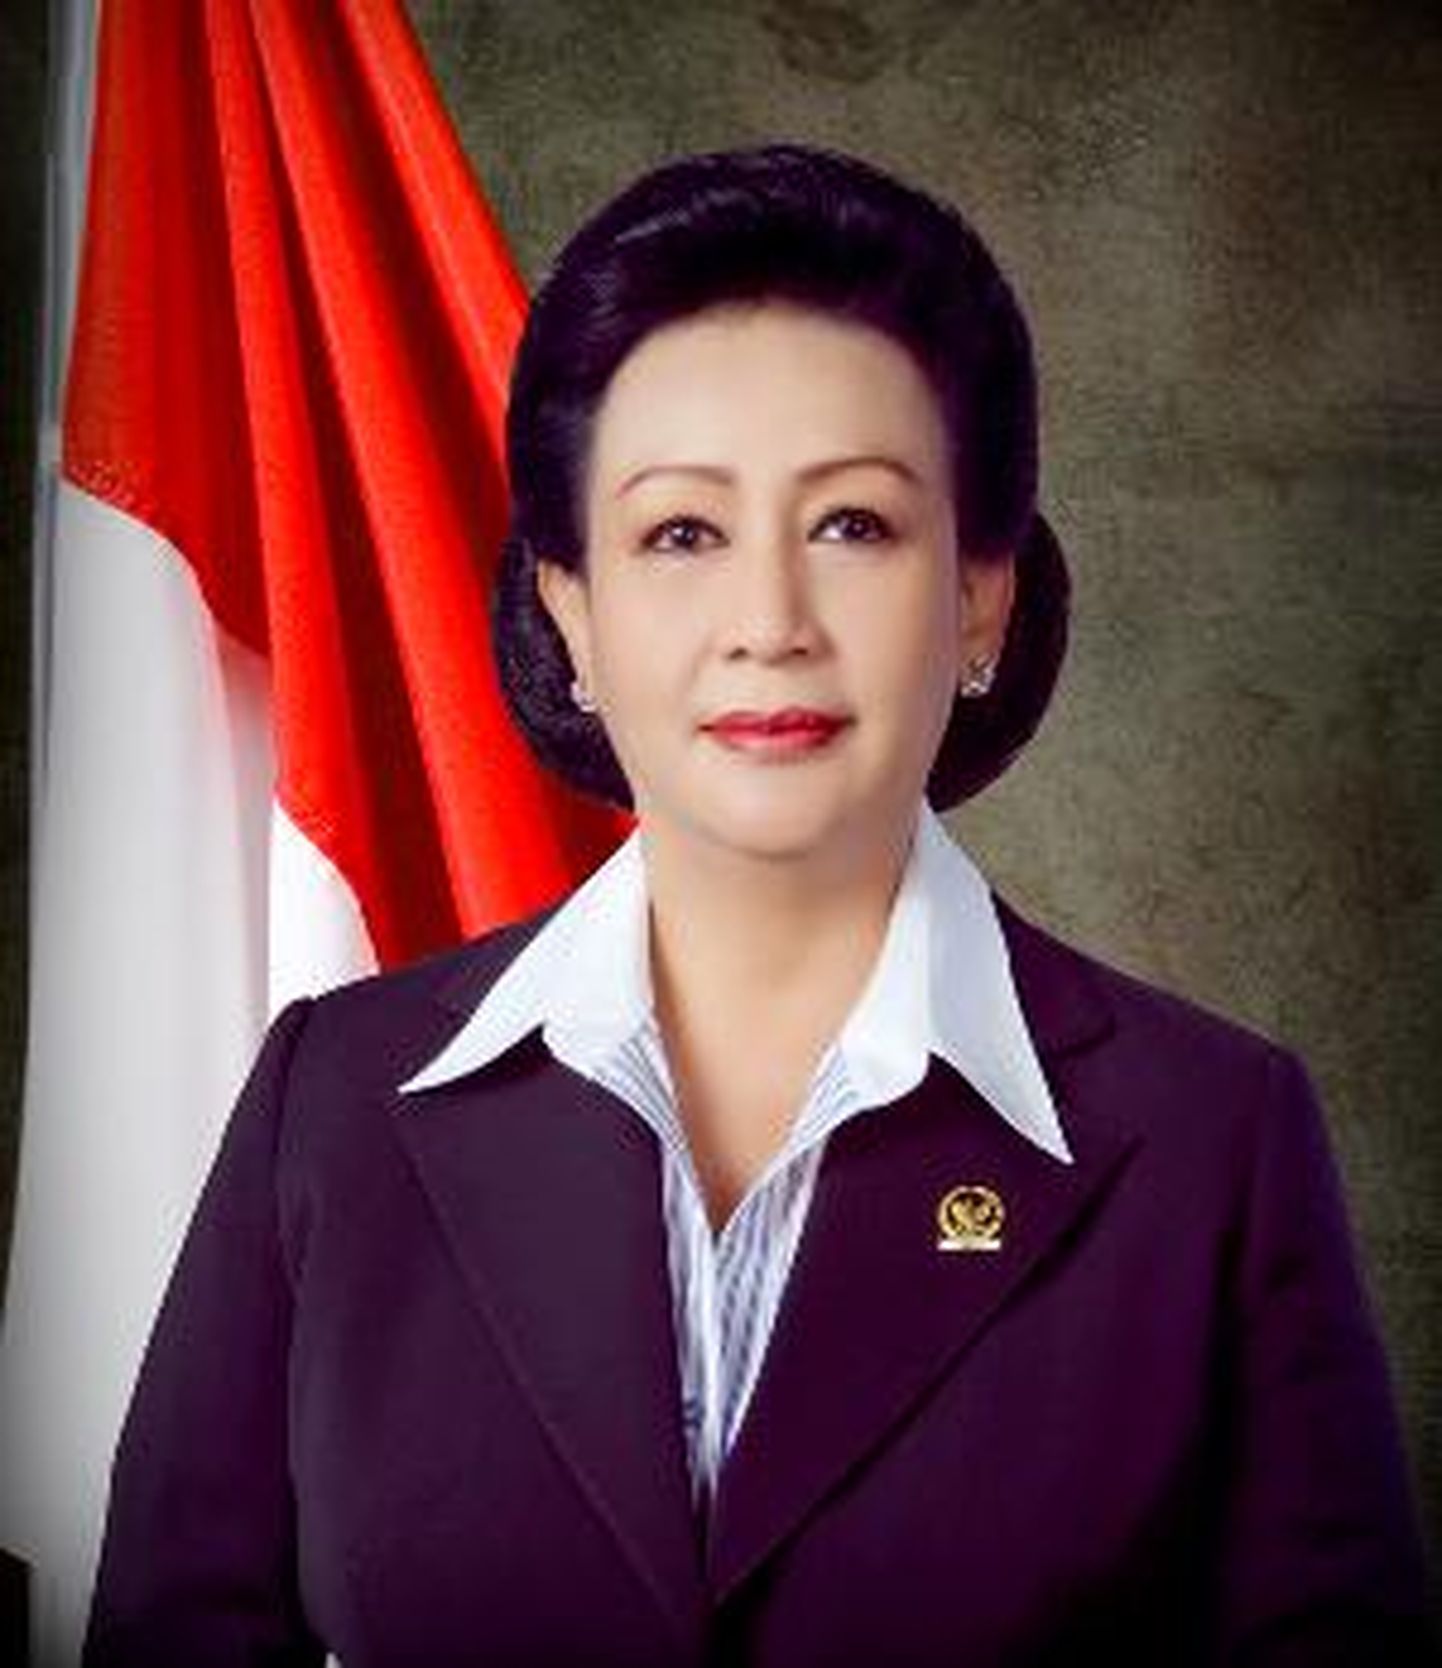 Yogyakarta eripiirkonna kuninganna Ratu Hemas.